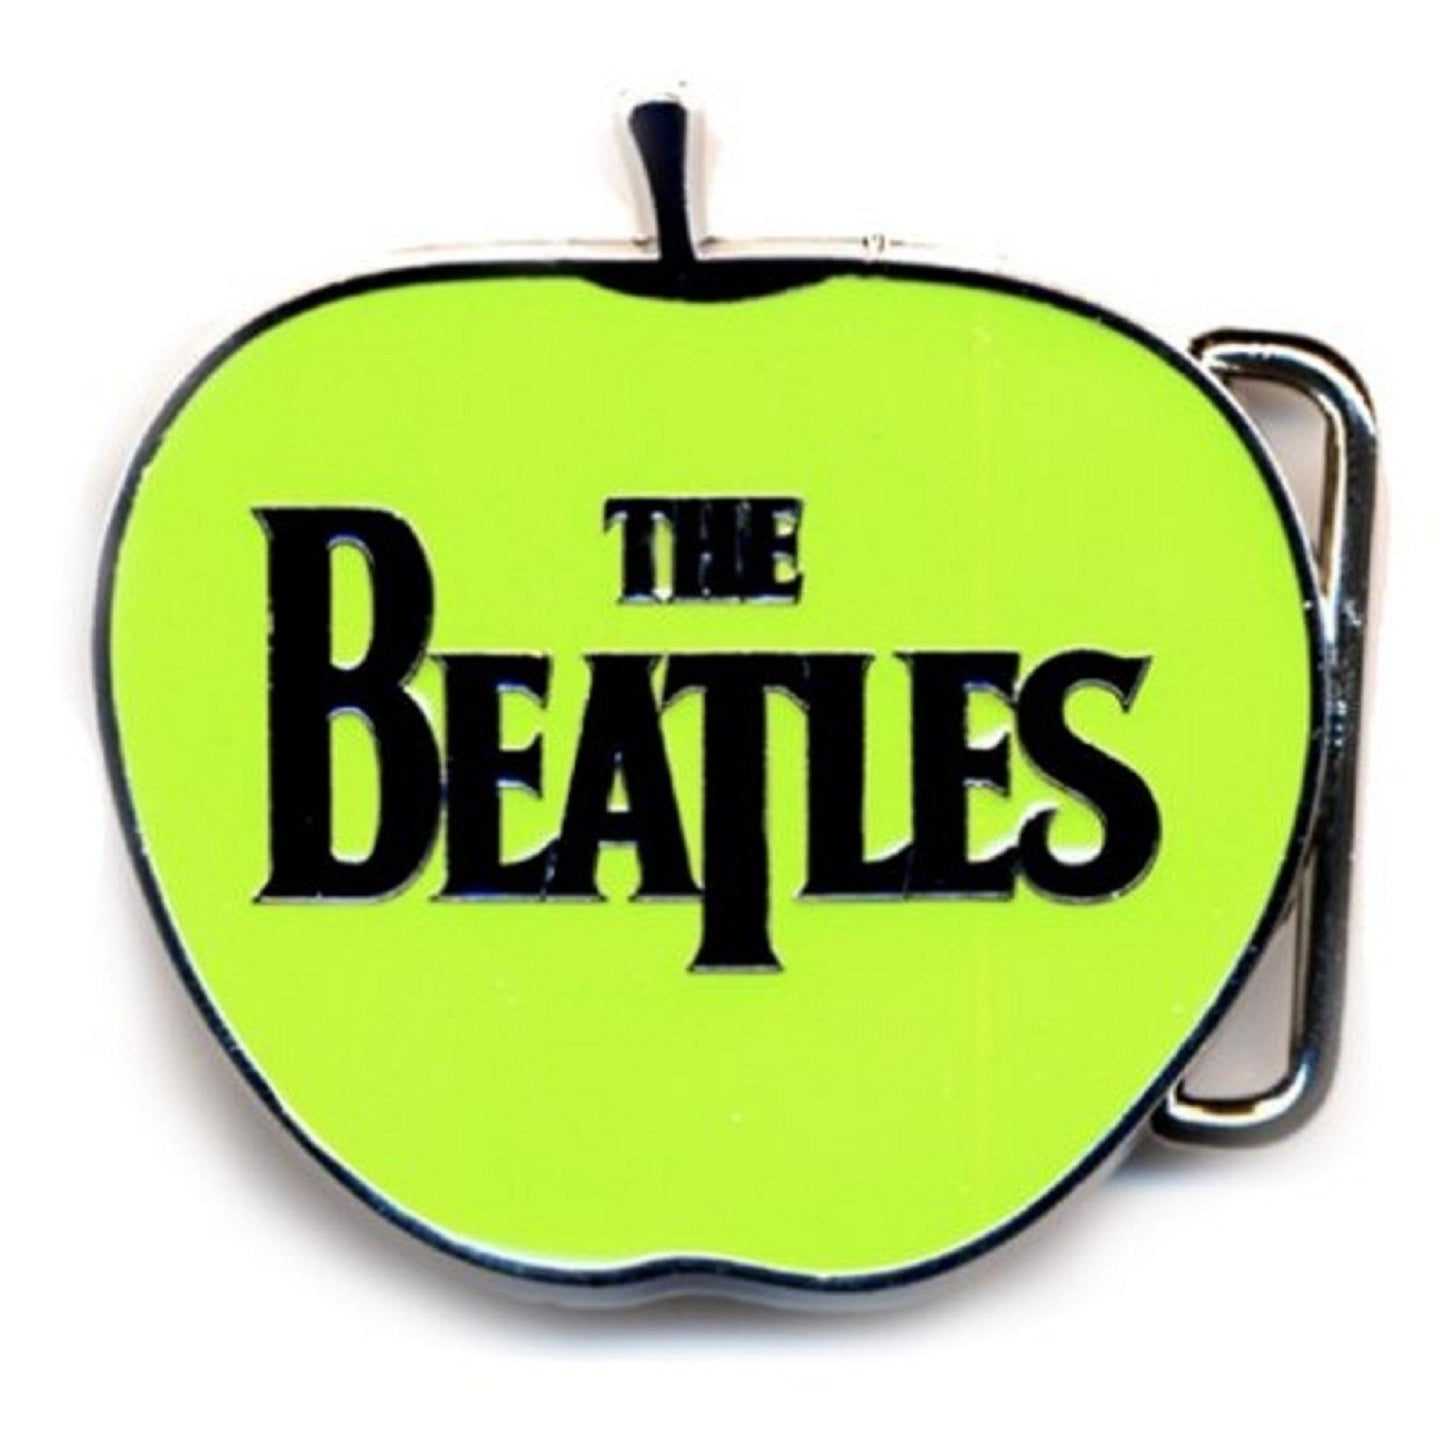 The Beatles Belt Buckle Classic Apple Shaped